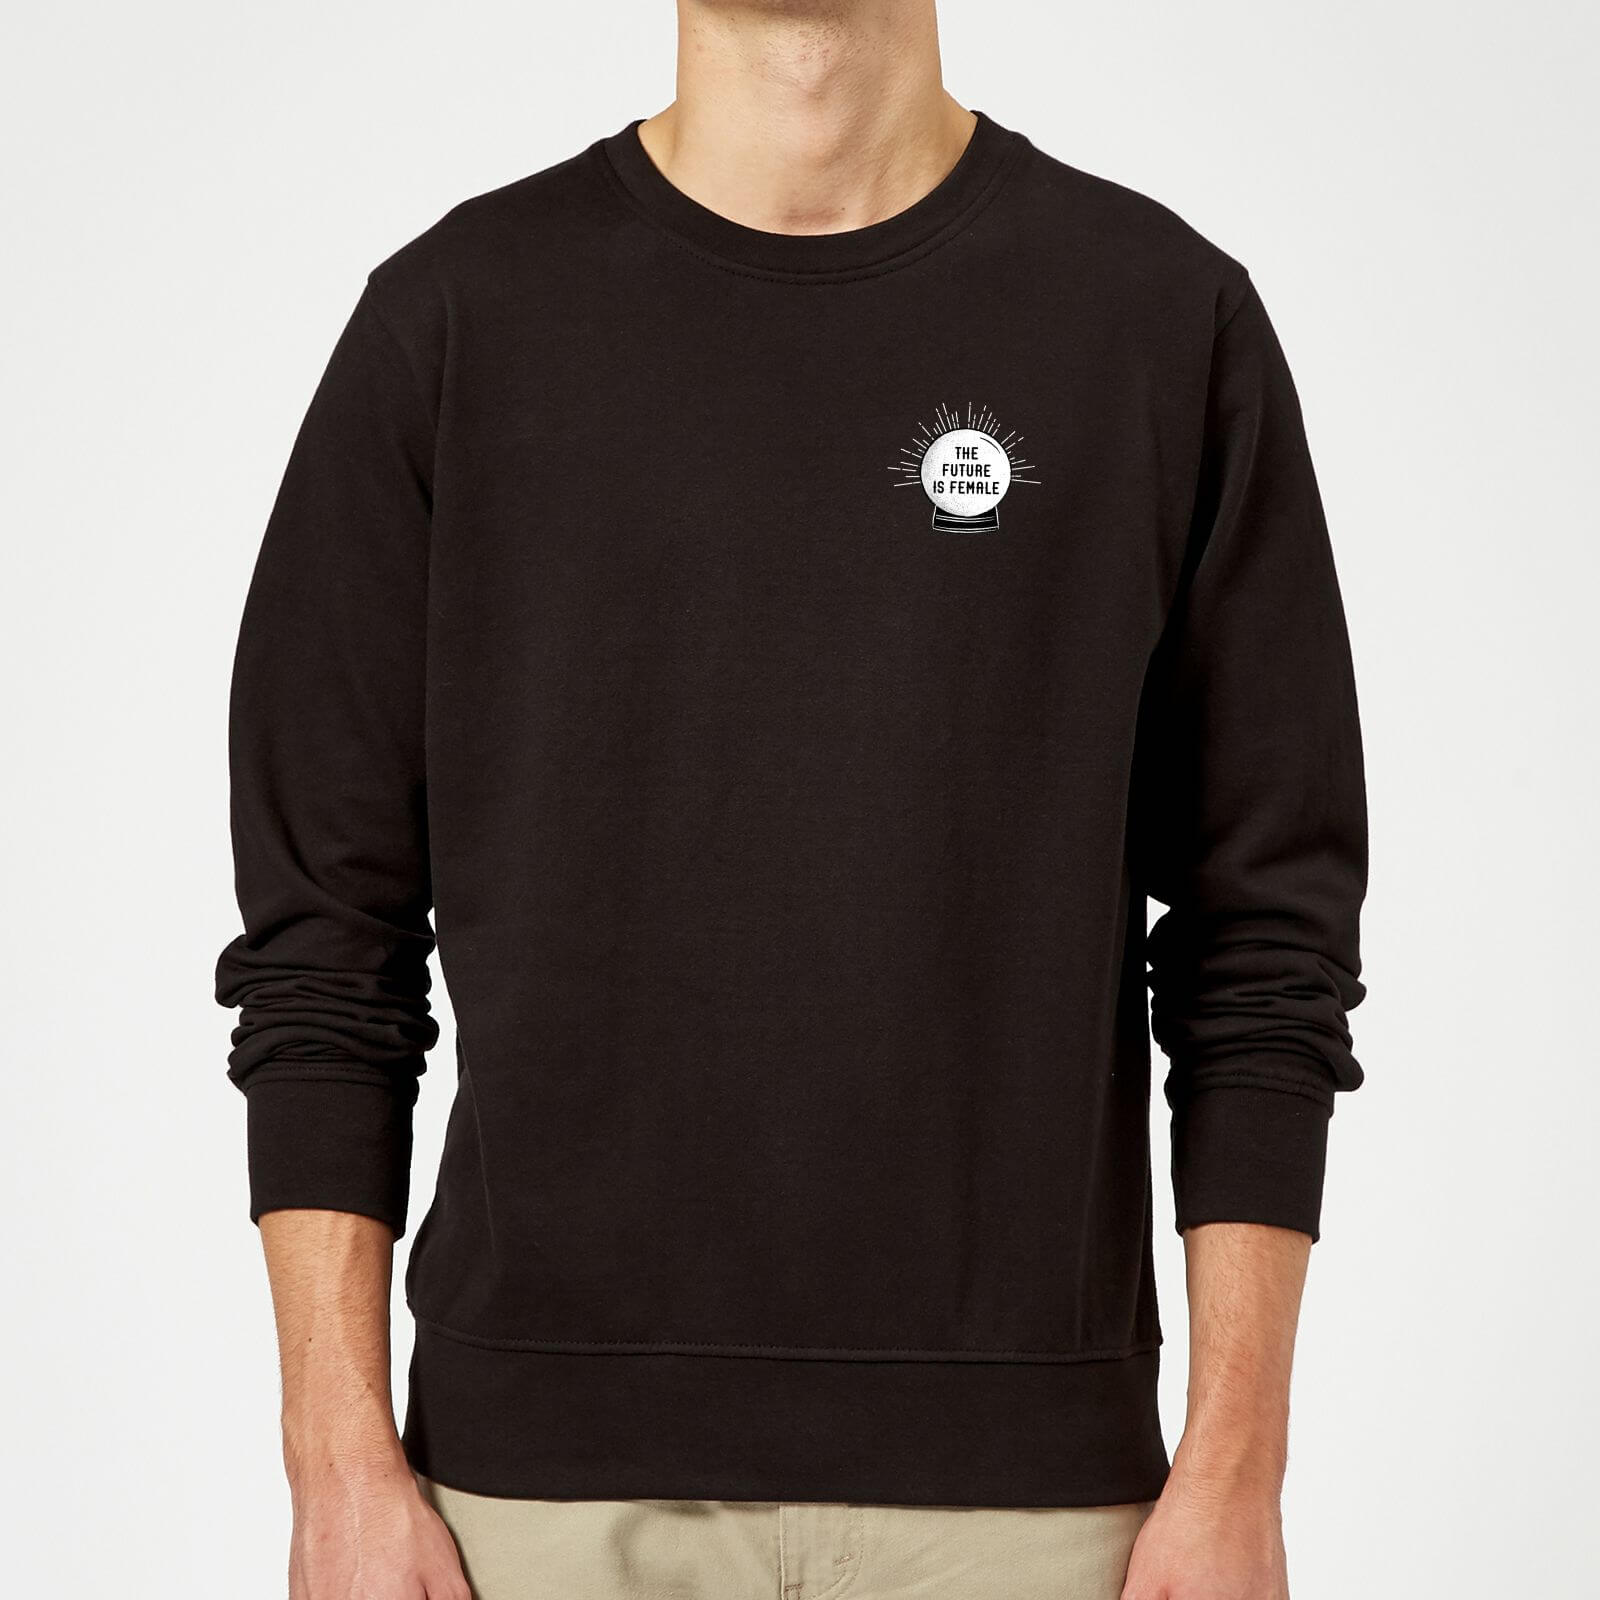 The Future Is Female Sweatshirt - Black - 5XL - Black